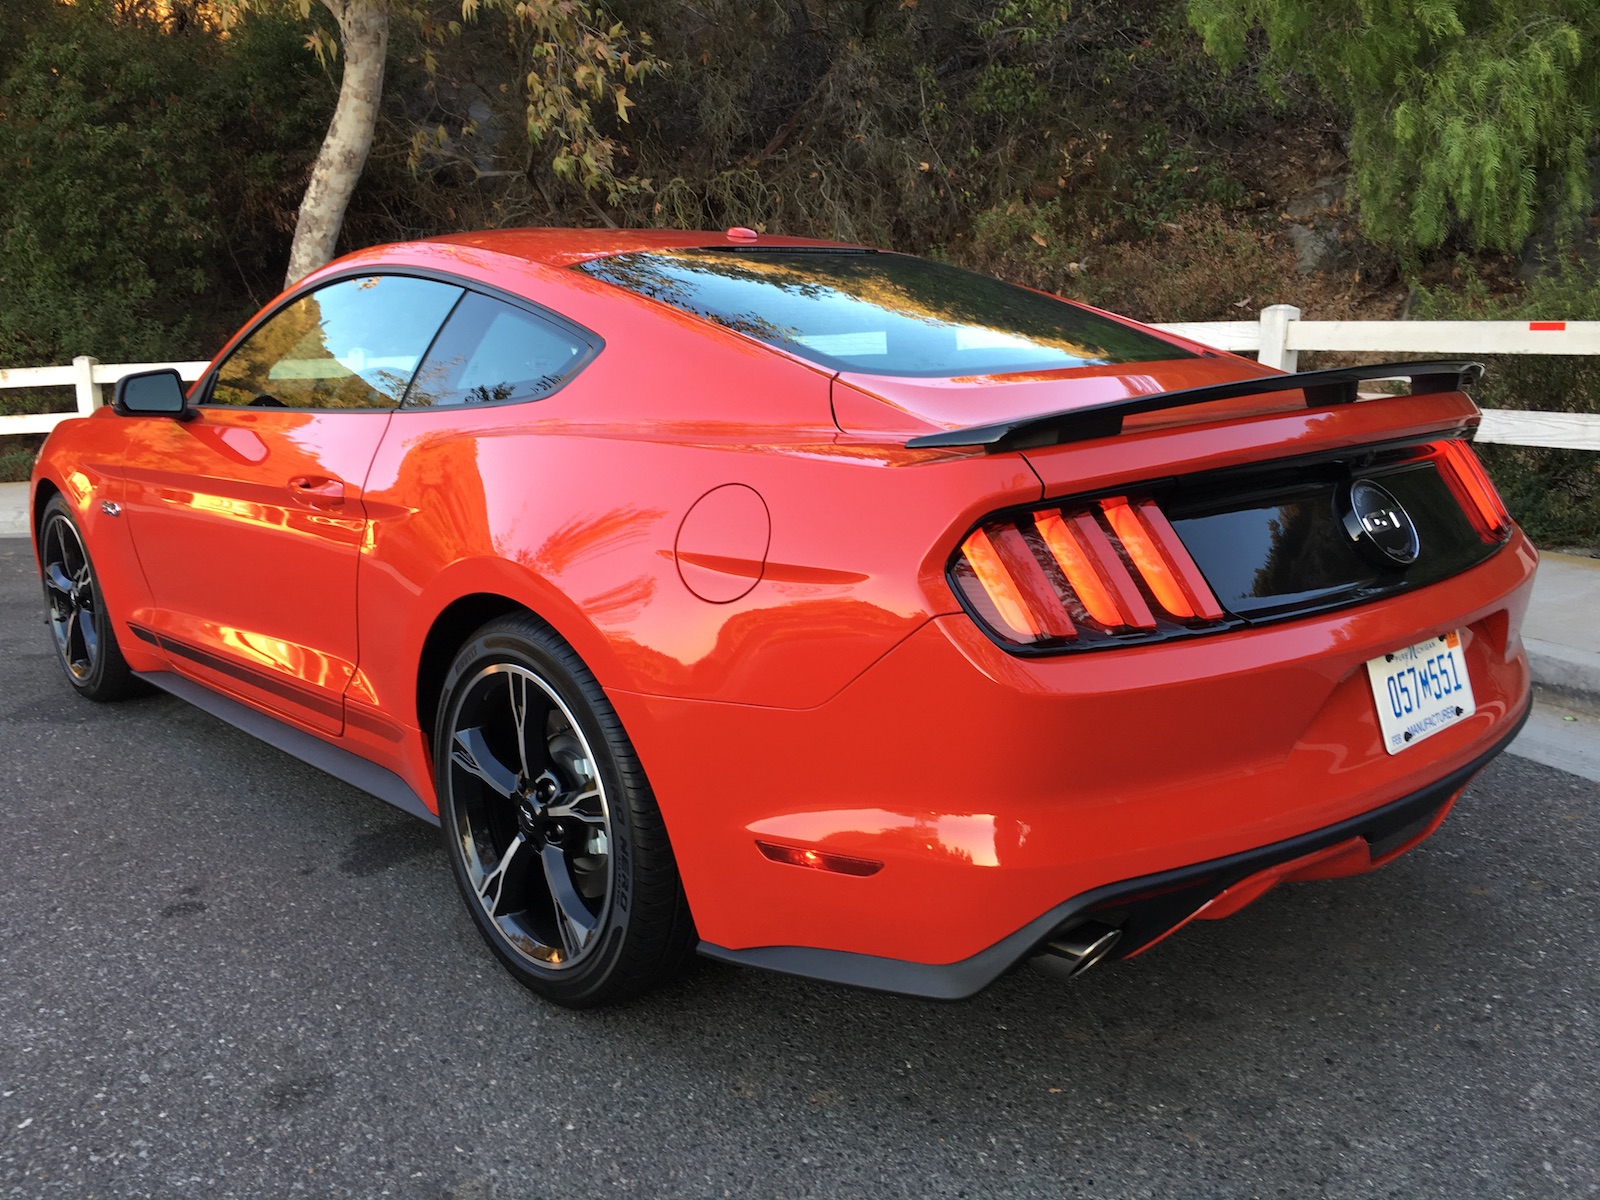 Duke's Drive: 2016 Ford Mustang GT California Special Review - Chris Duke